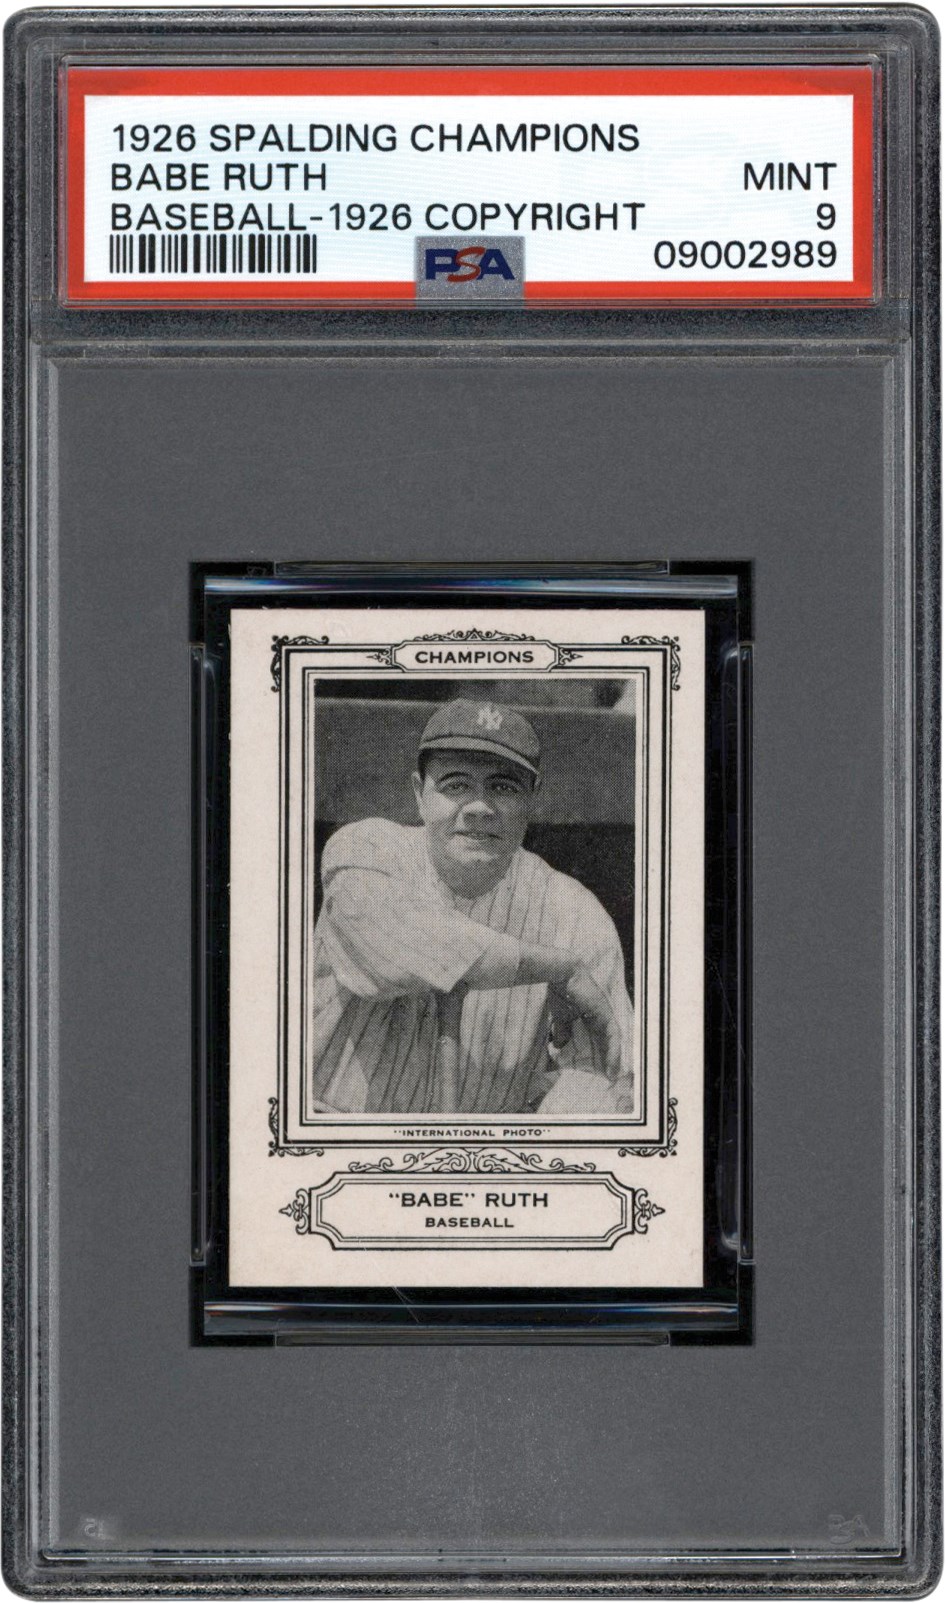 - 1926 Spalding Champion Babe Ruth 1926 Copyright PSA MINT 9 (Pop 1 of 4 Highest Graded)